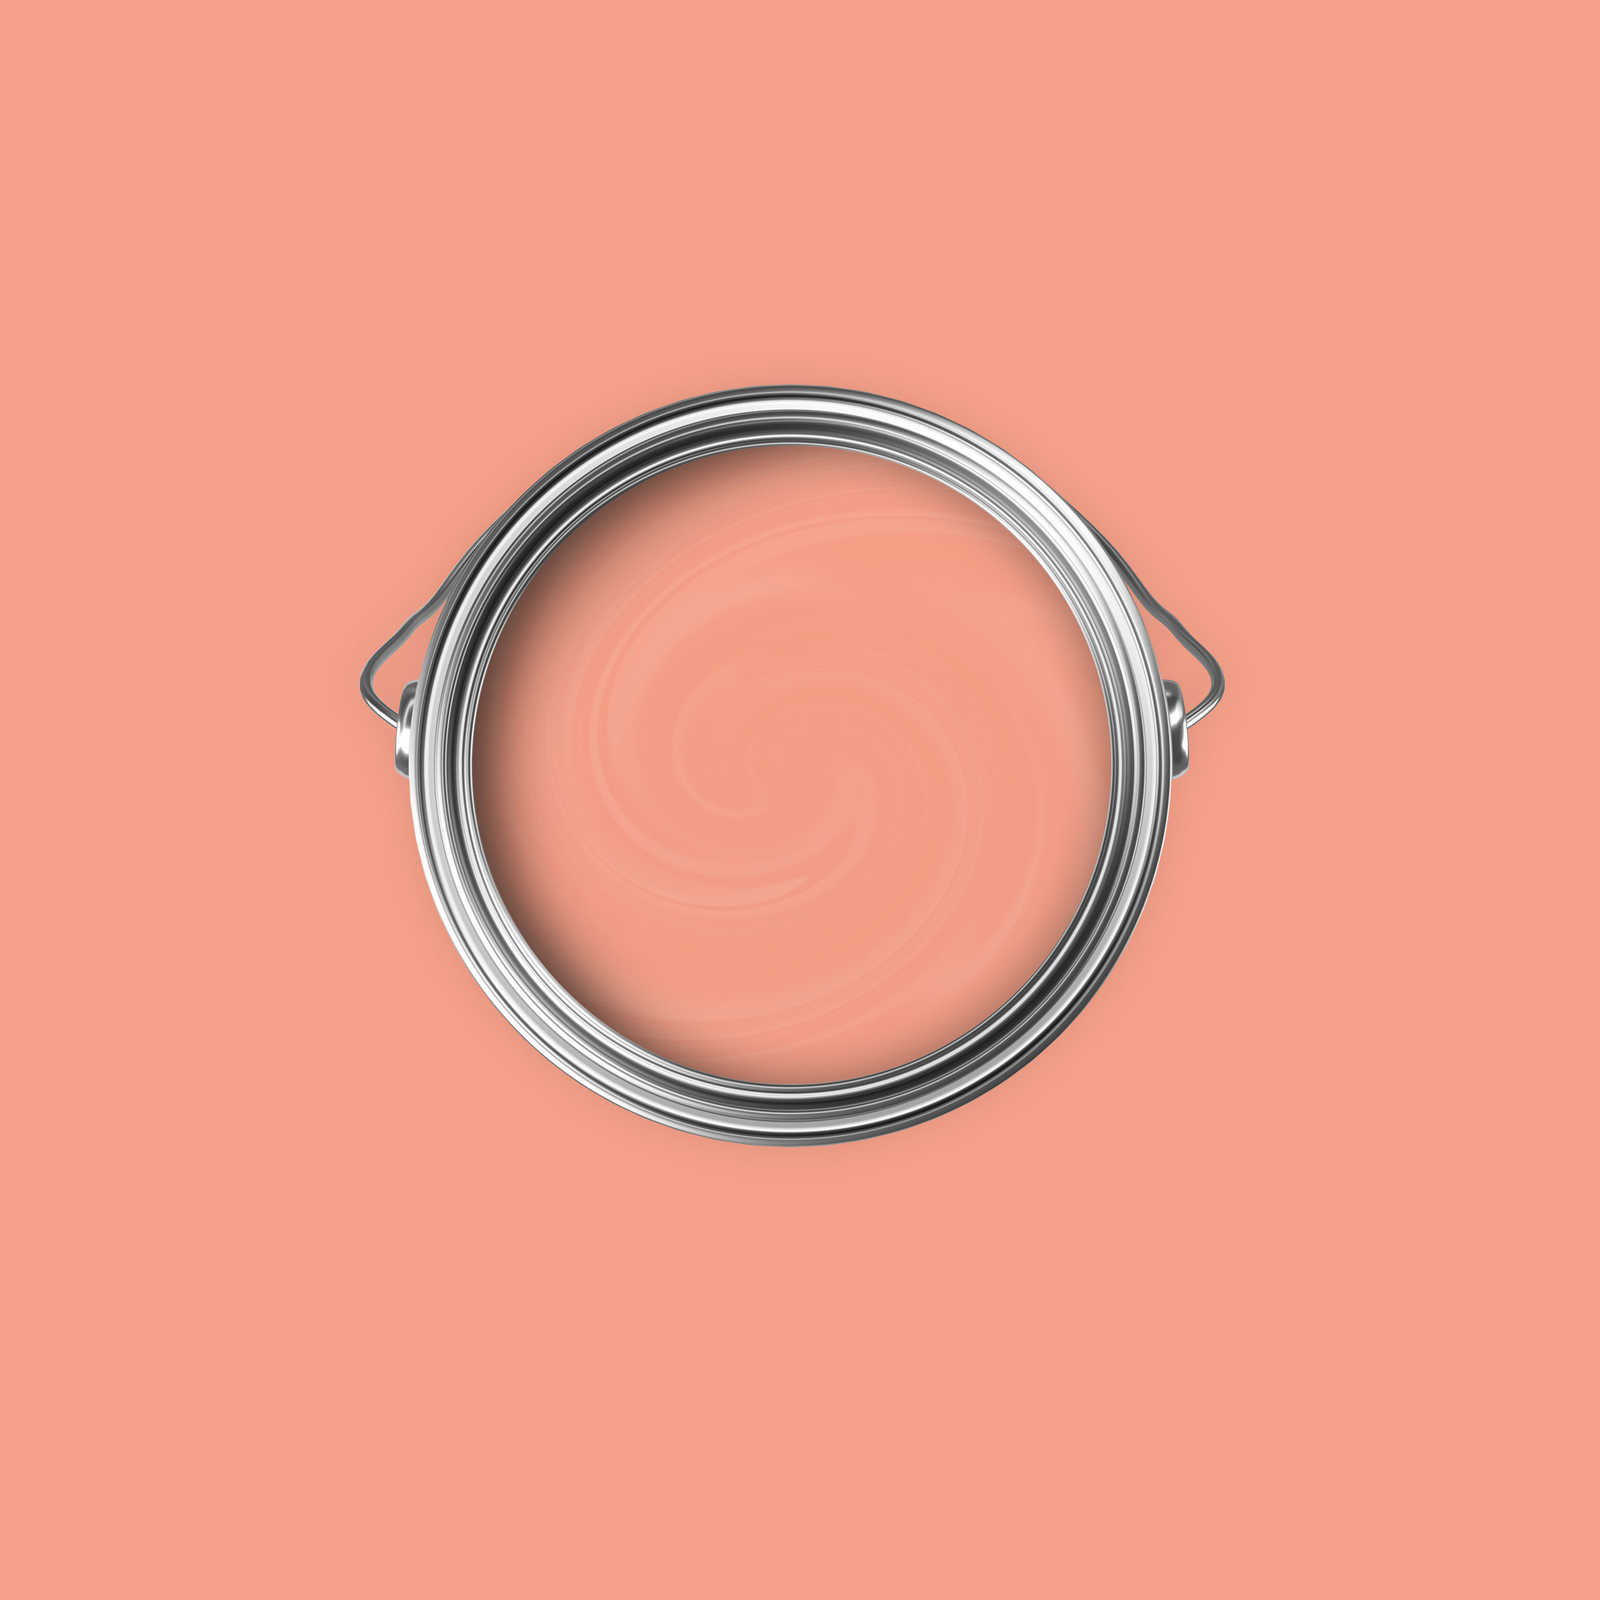             Premium Wall Paint Harmonious Salmon »Active Apricot« NW914 – 2.5 litre
        